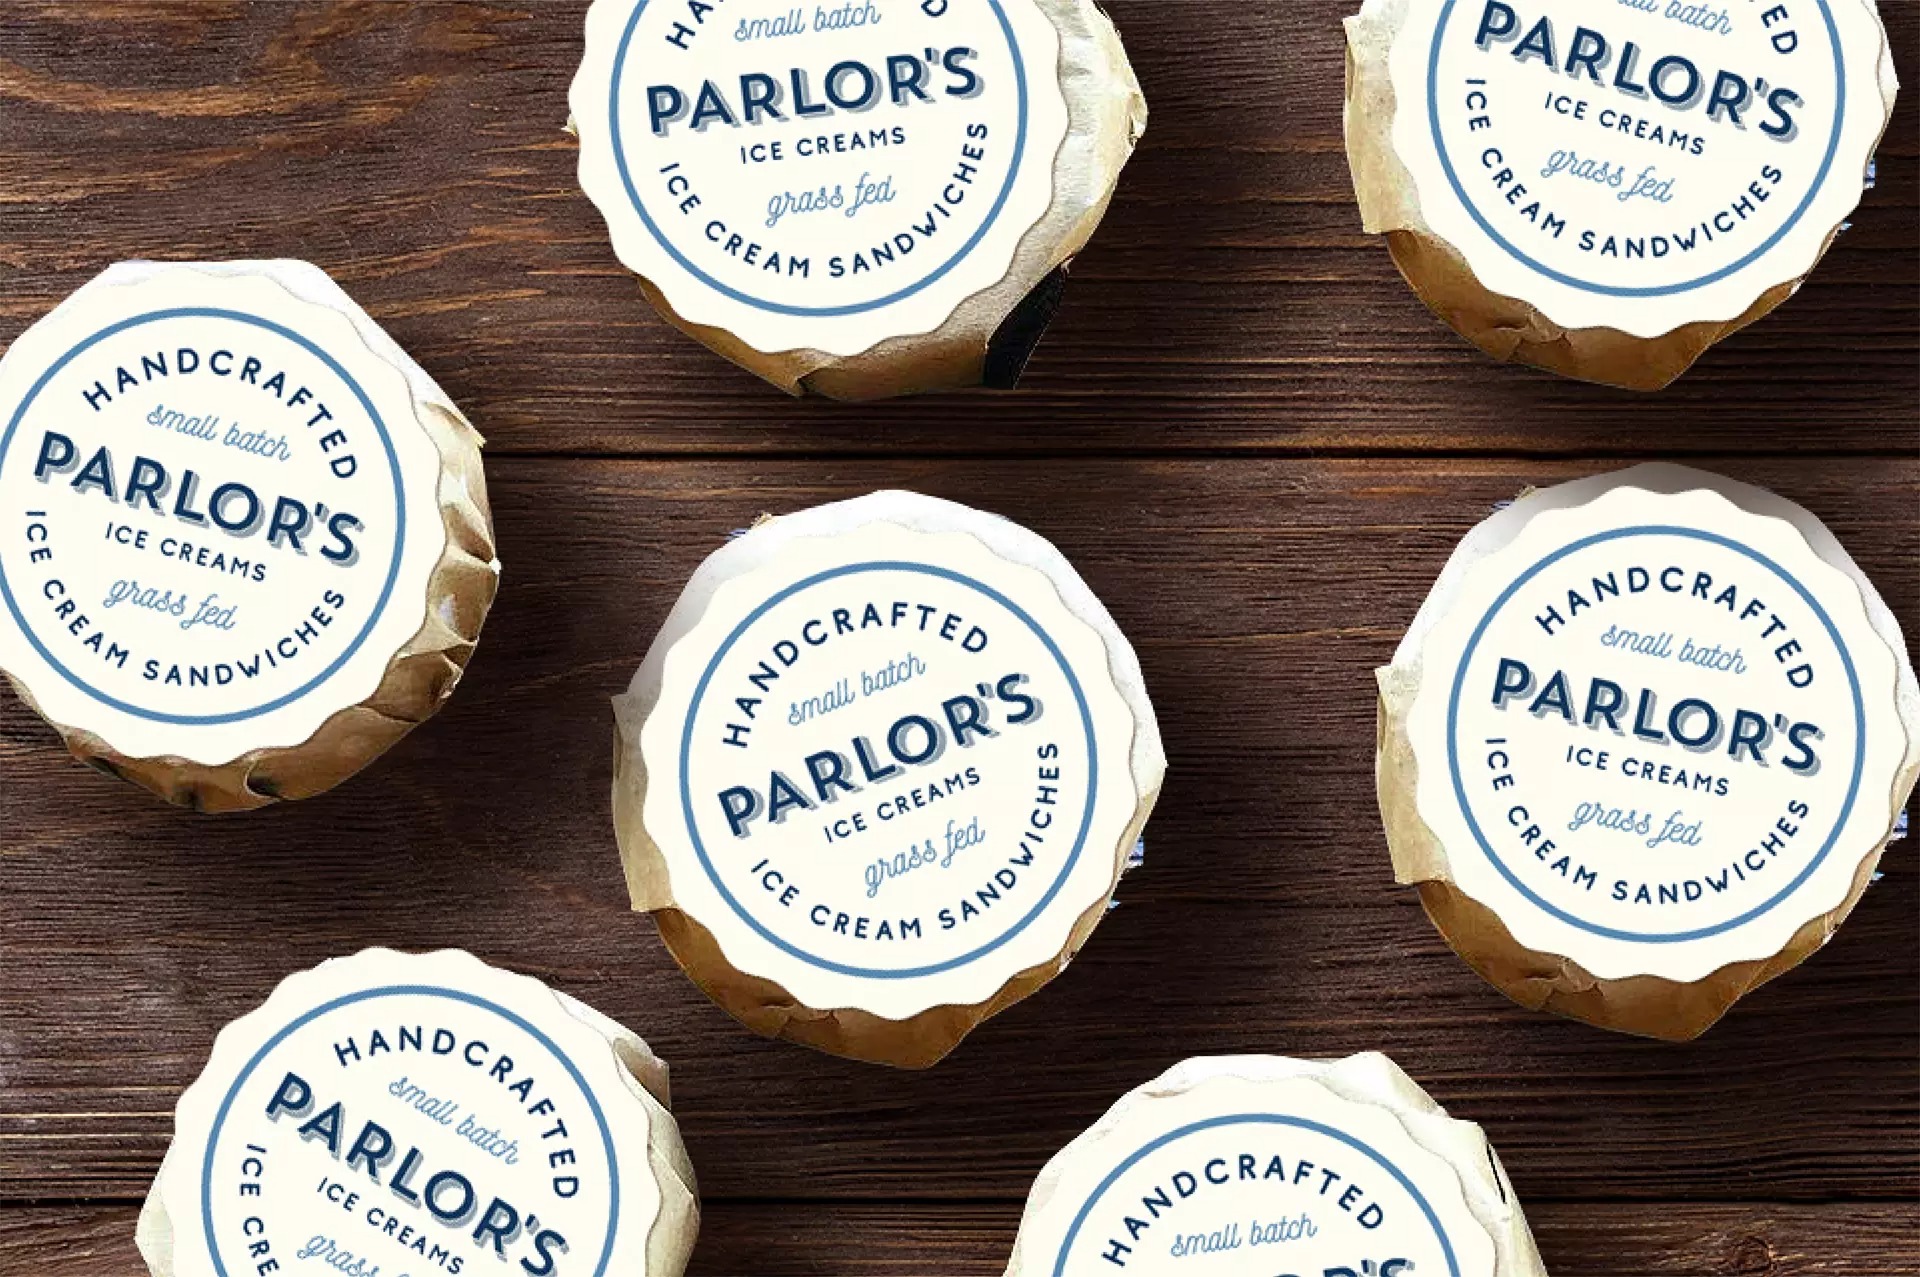 Parlor’s Ice Creams冰淇淋品牌形象设计